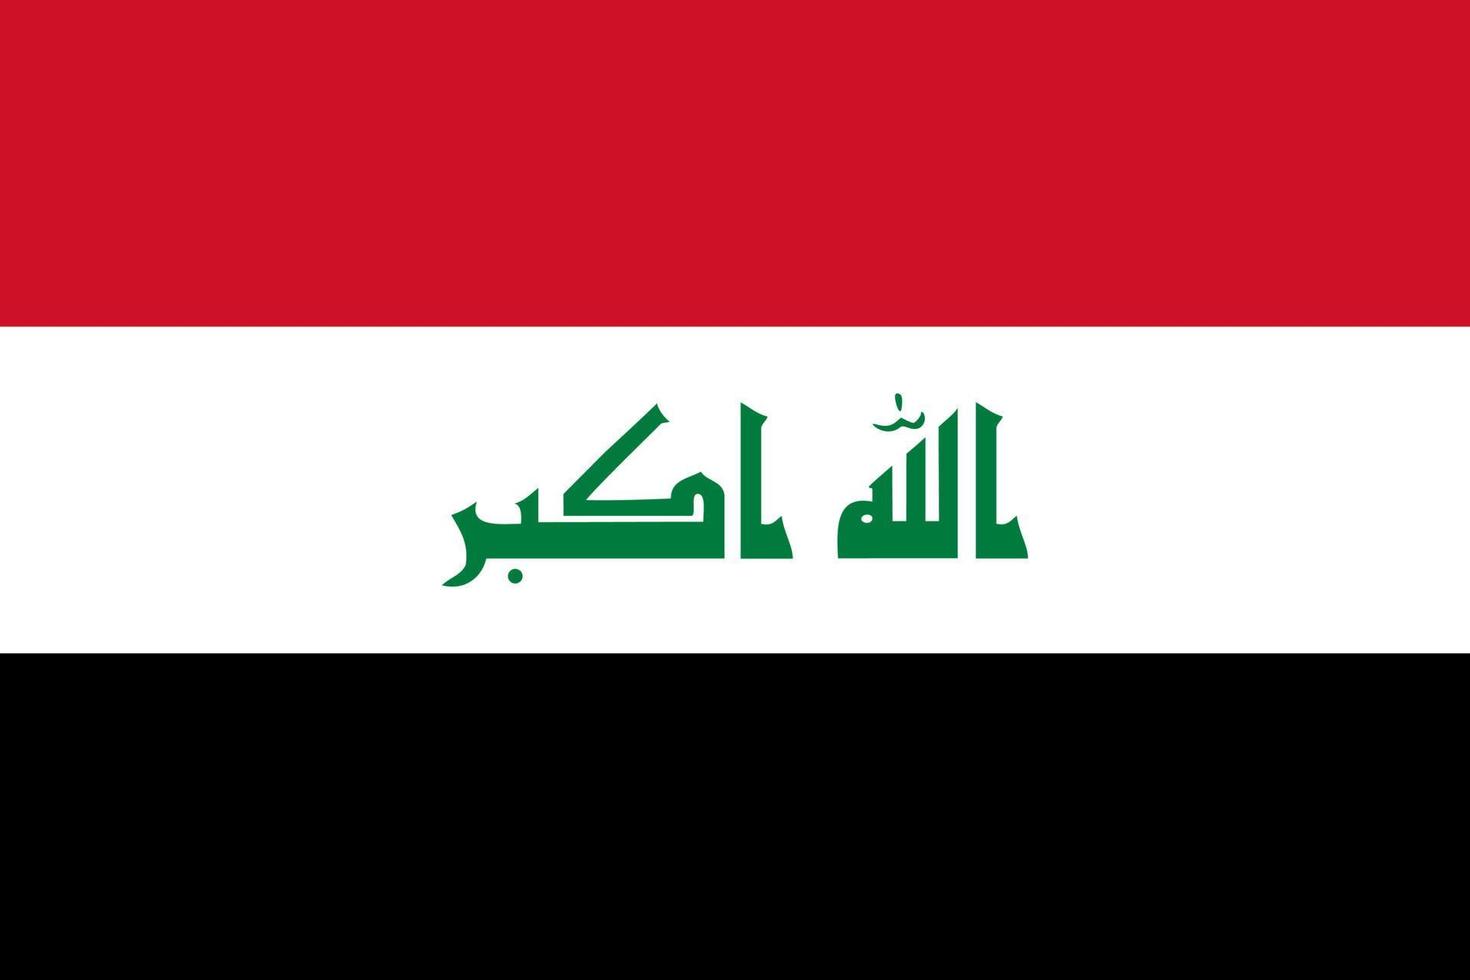 vector de bandera de irak